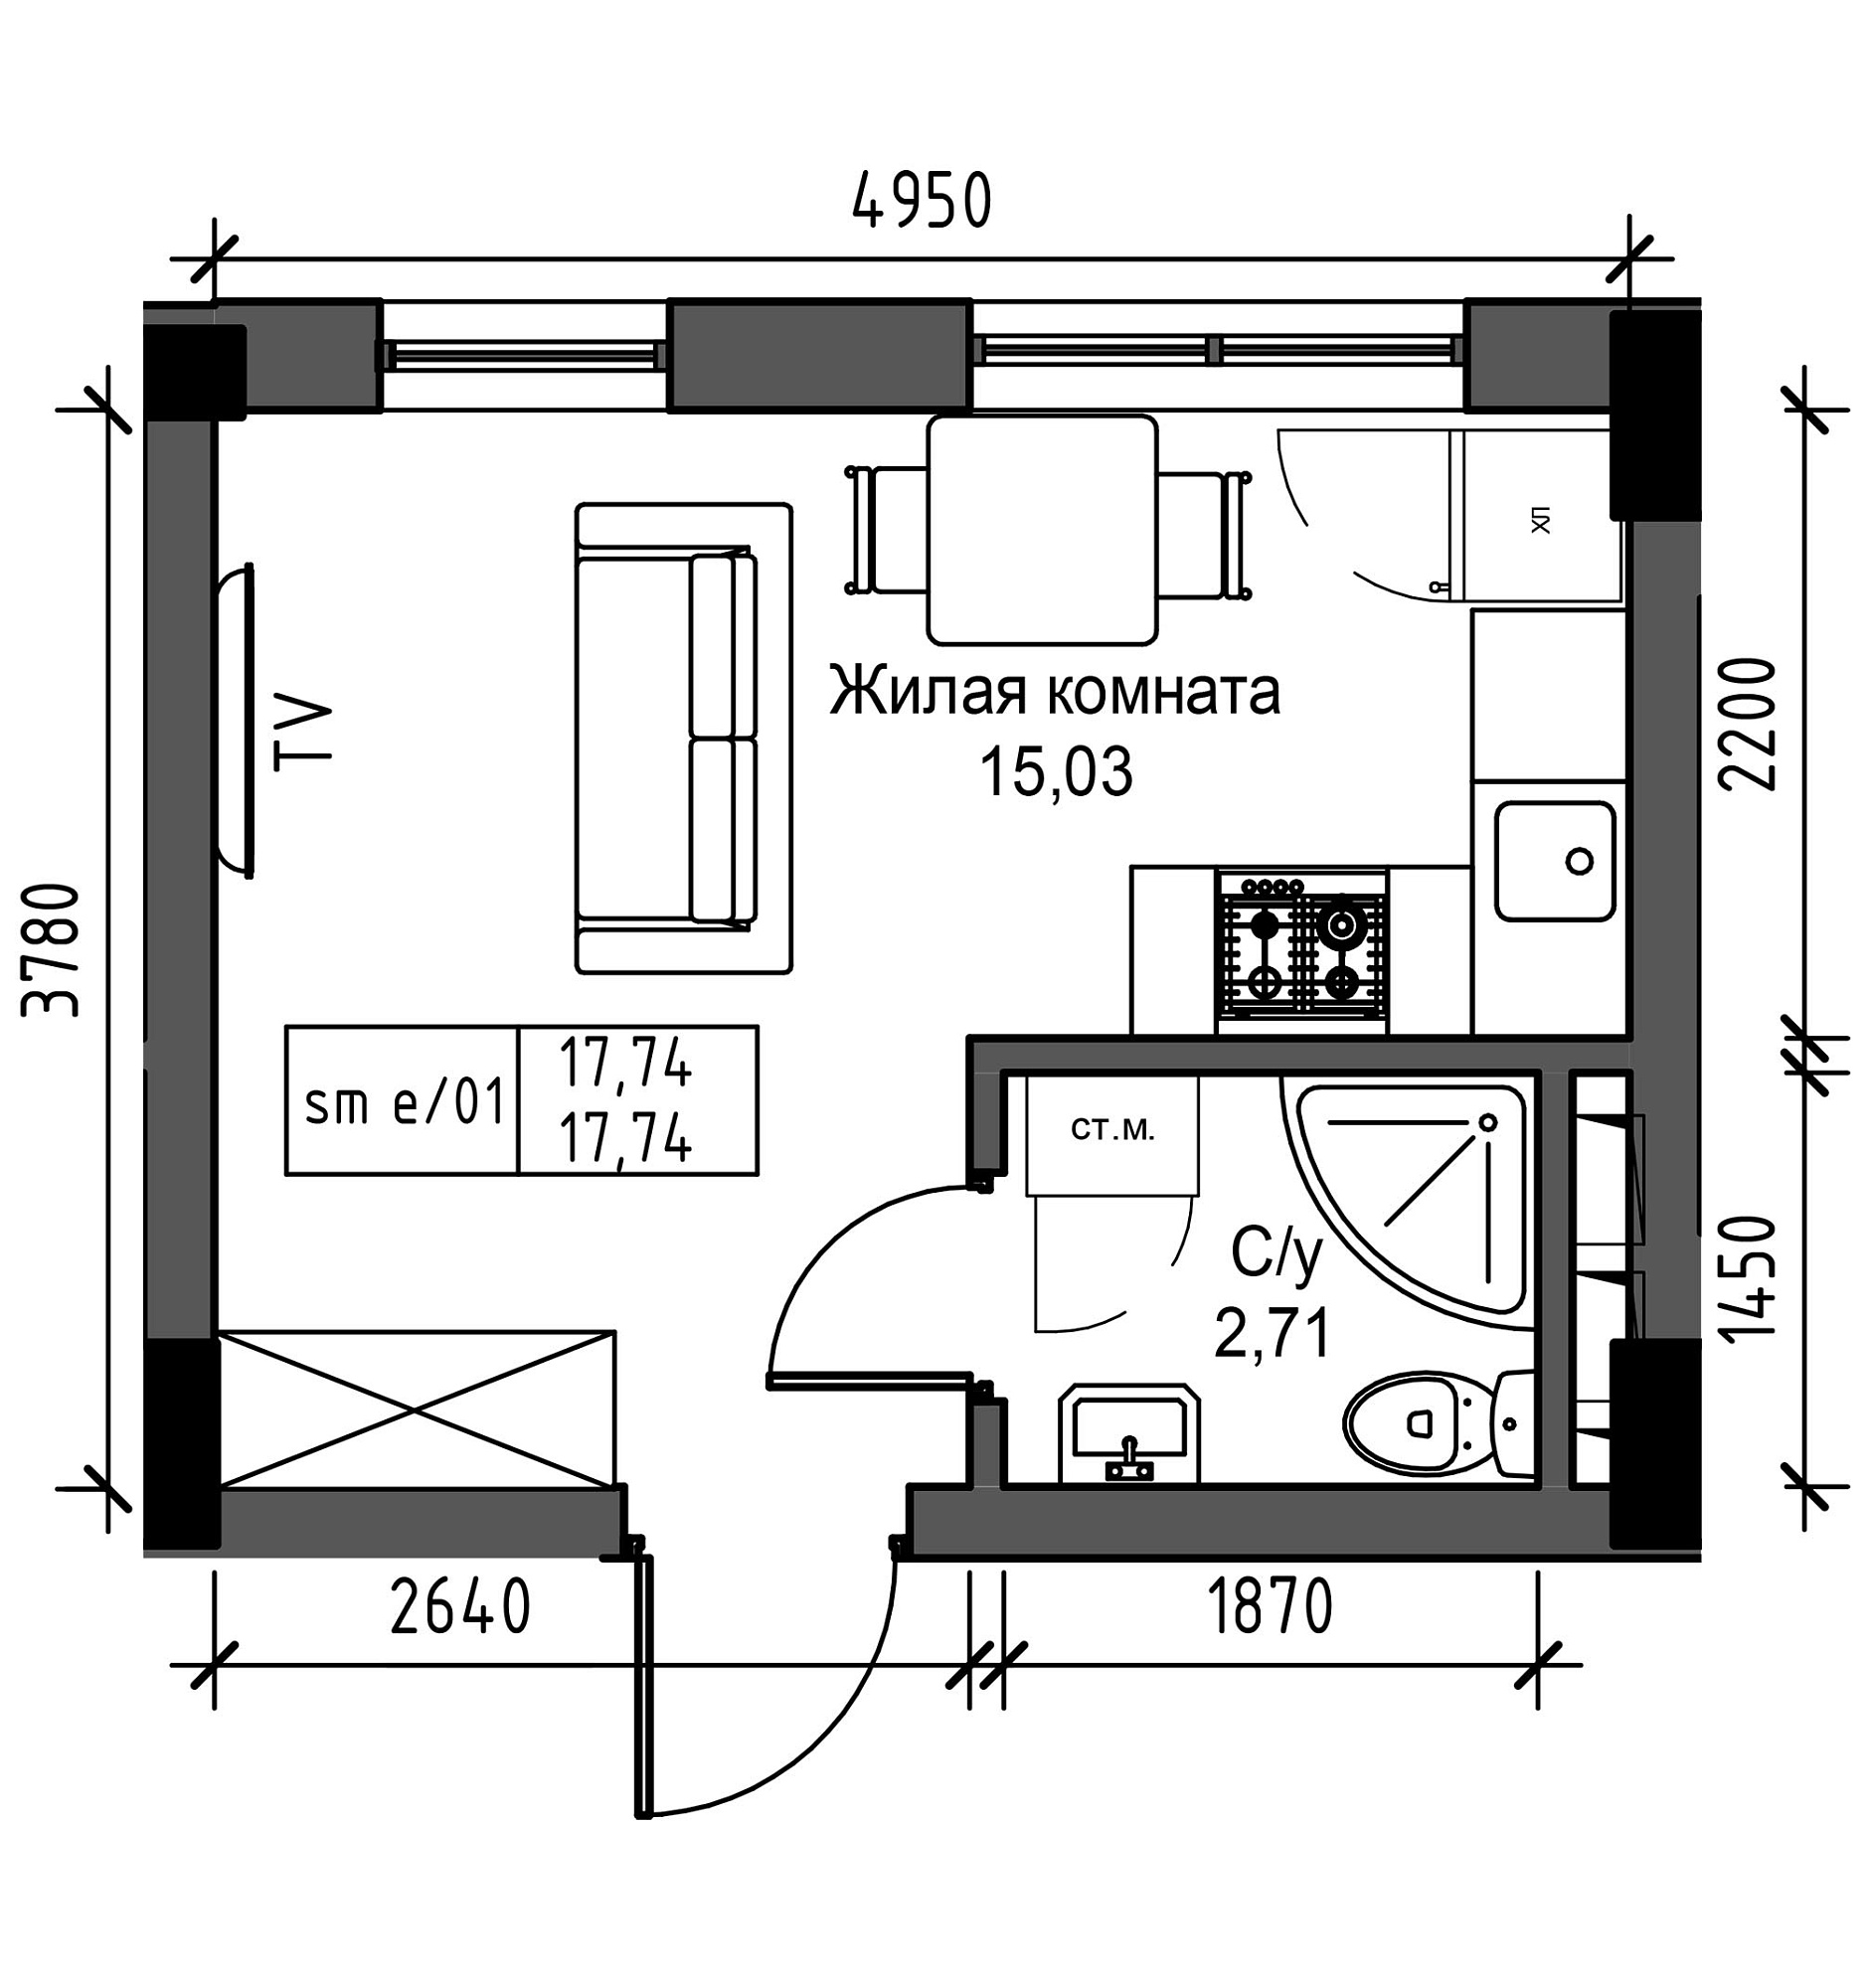 Planning Smart flats area 17.74m2, UM-003-03/0015.